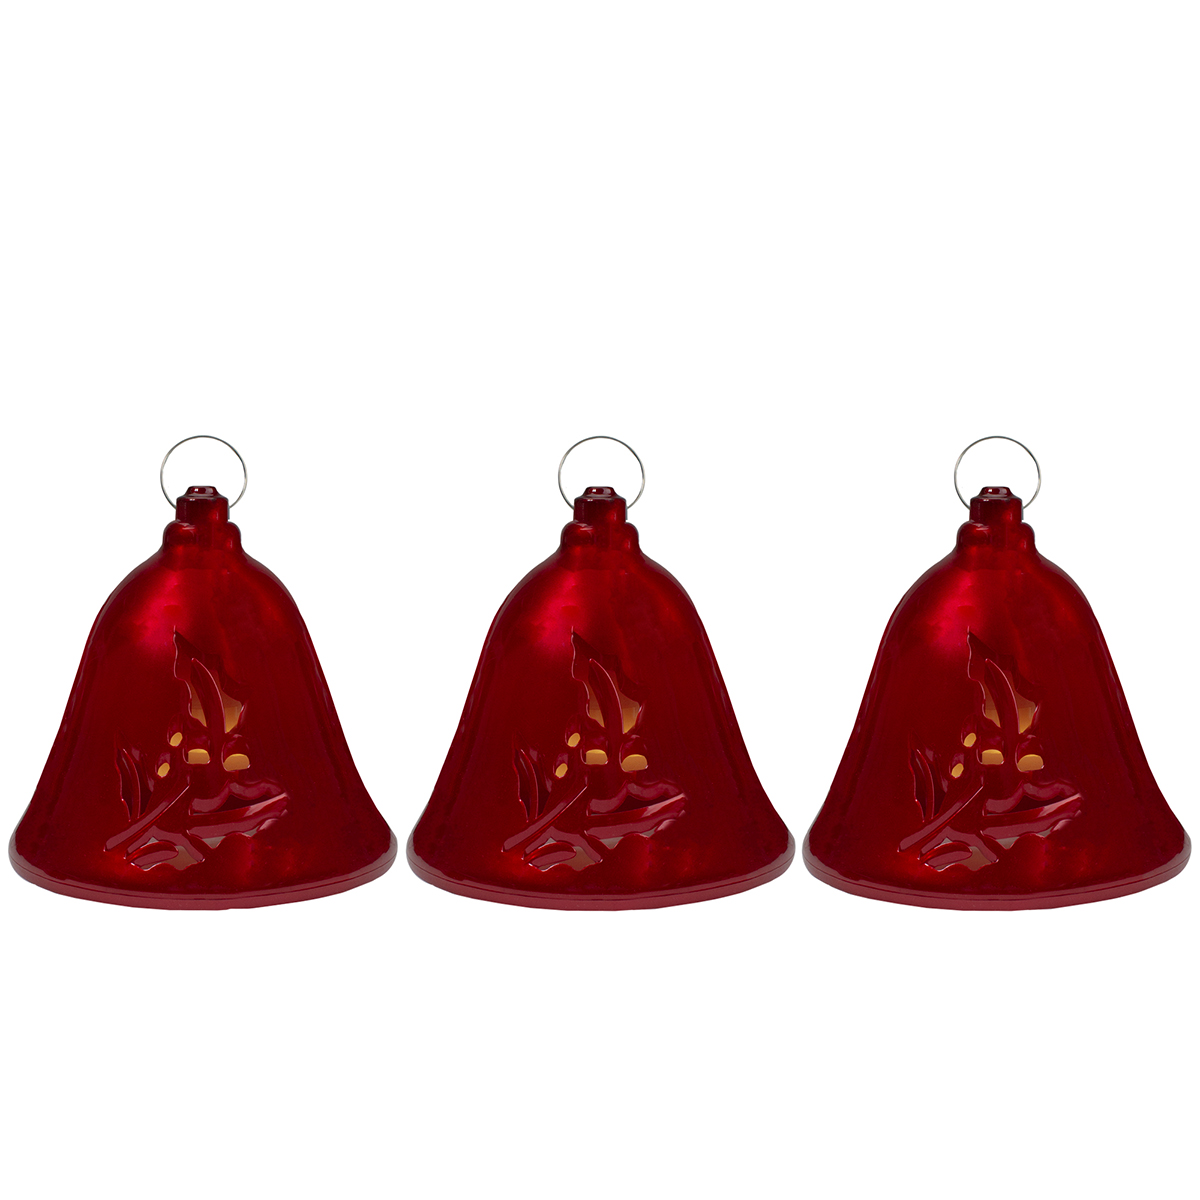 Northlight Seasonal Musical Lighted Red Bells Decor - Set of 3